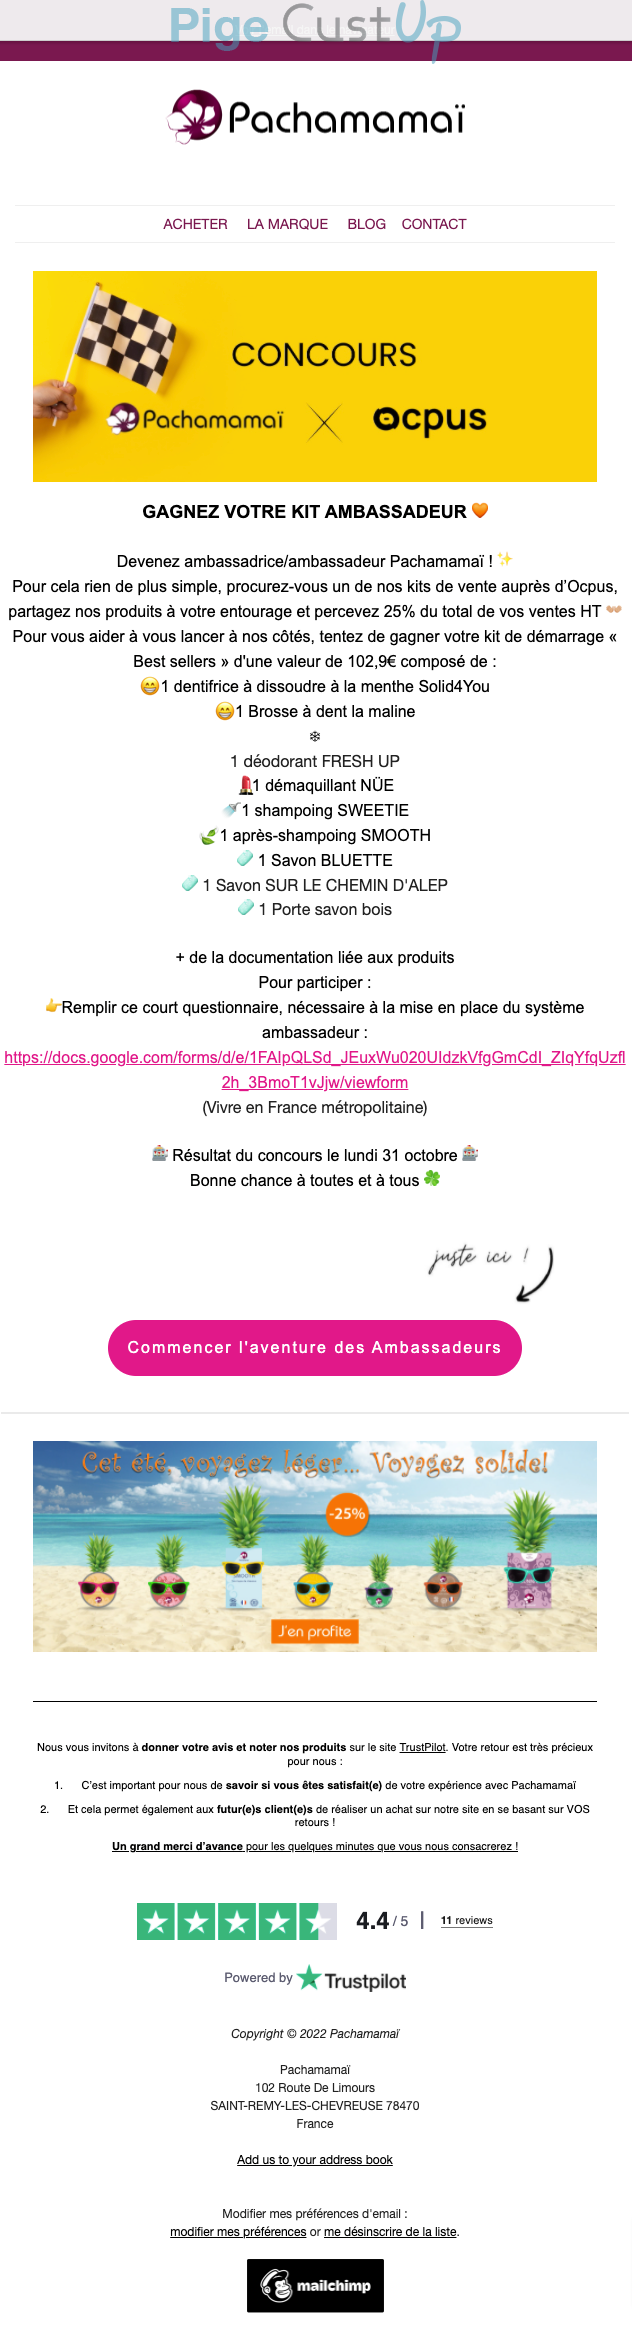 Exemple de Type de media  e-mailing - Pachamamaï - Marketing fidélisation - Testeurs / Ambassadeurs